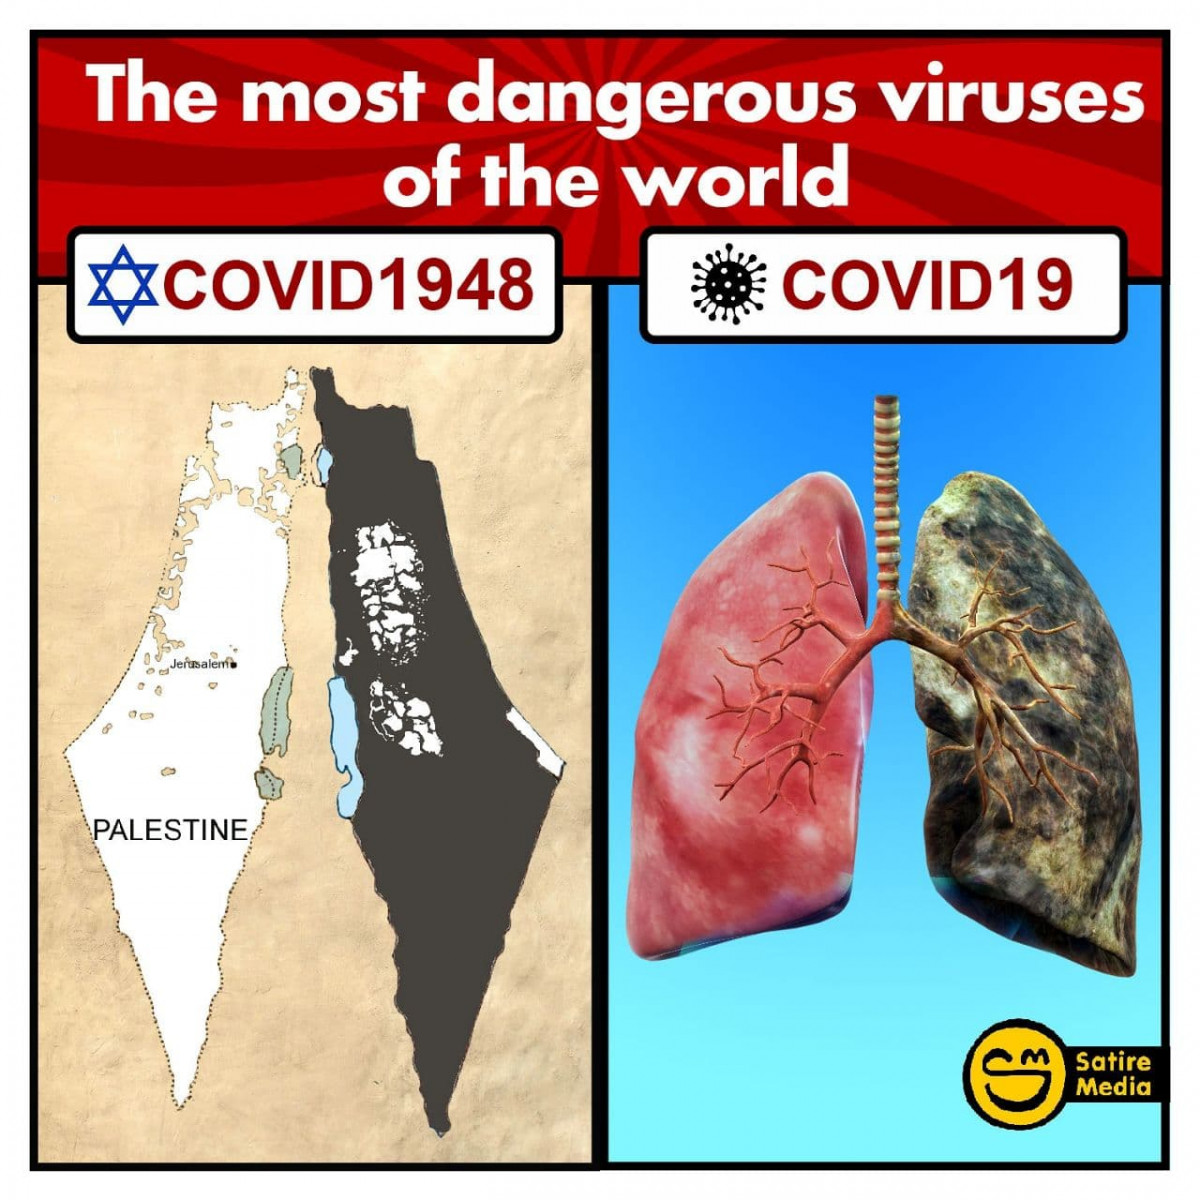 The most dangerous viruses of the world